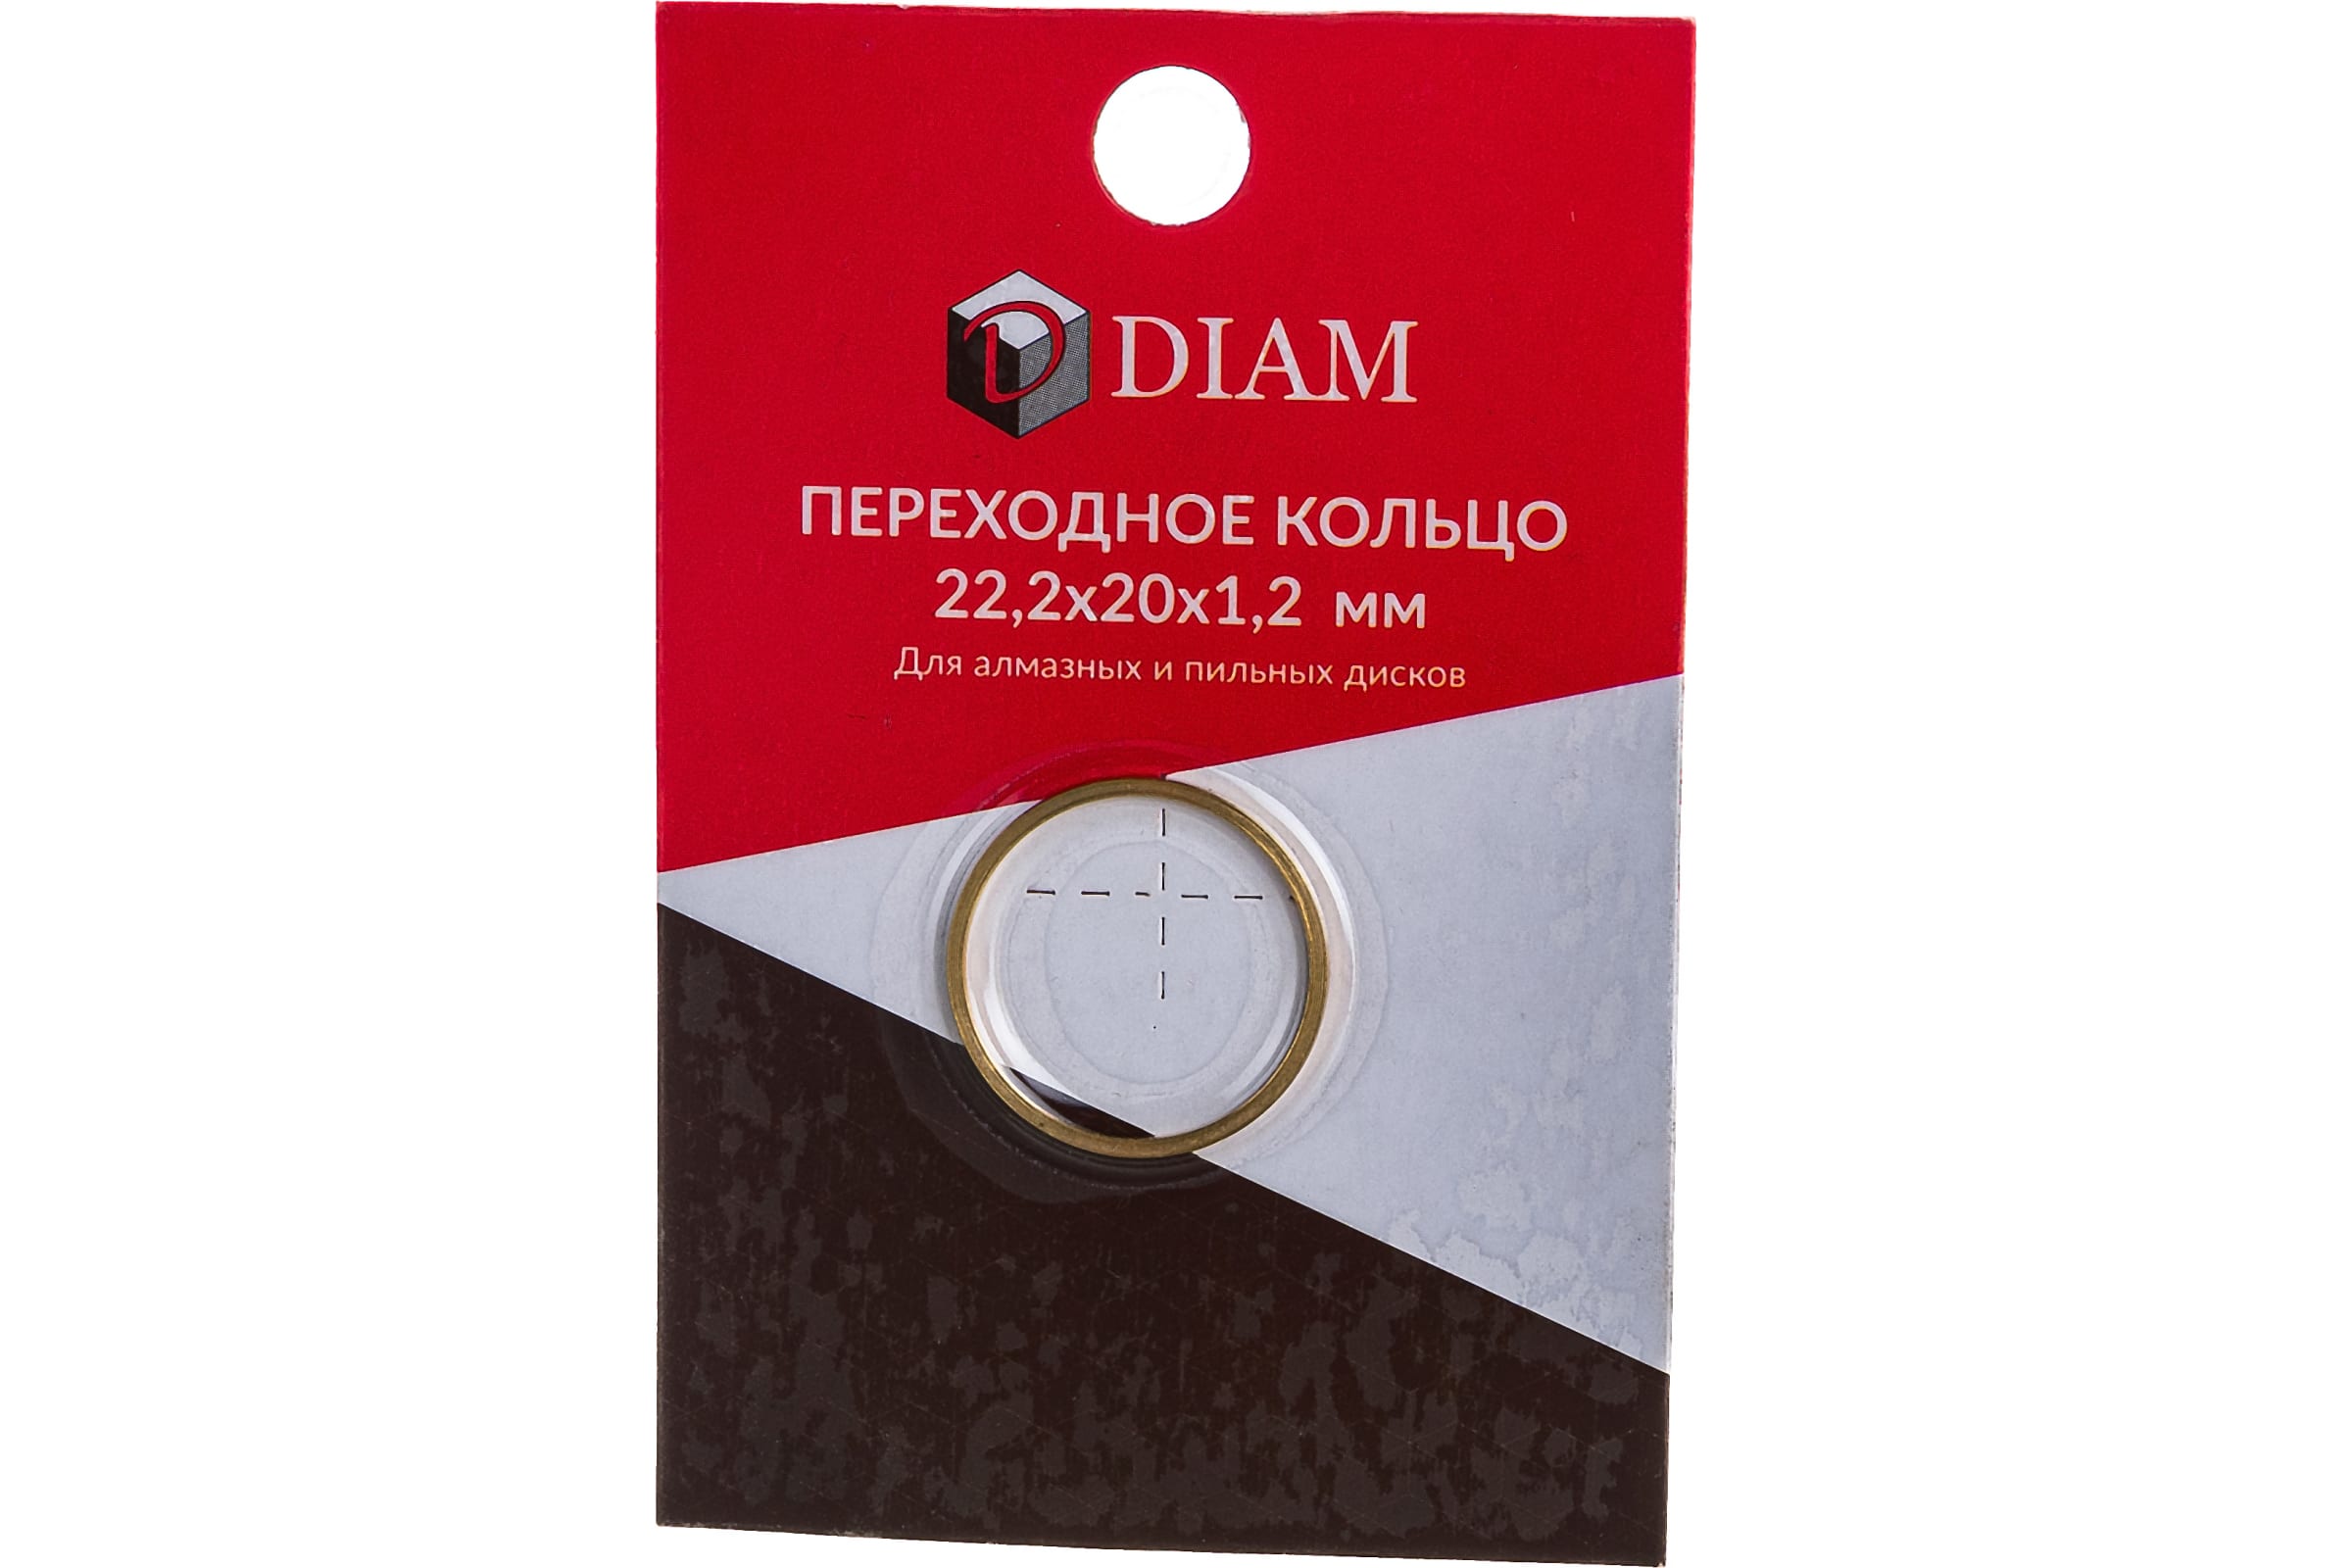 DIAM Переходное кольцо 22,2х20х1,2 640082 переходное кольцо trio diamond